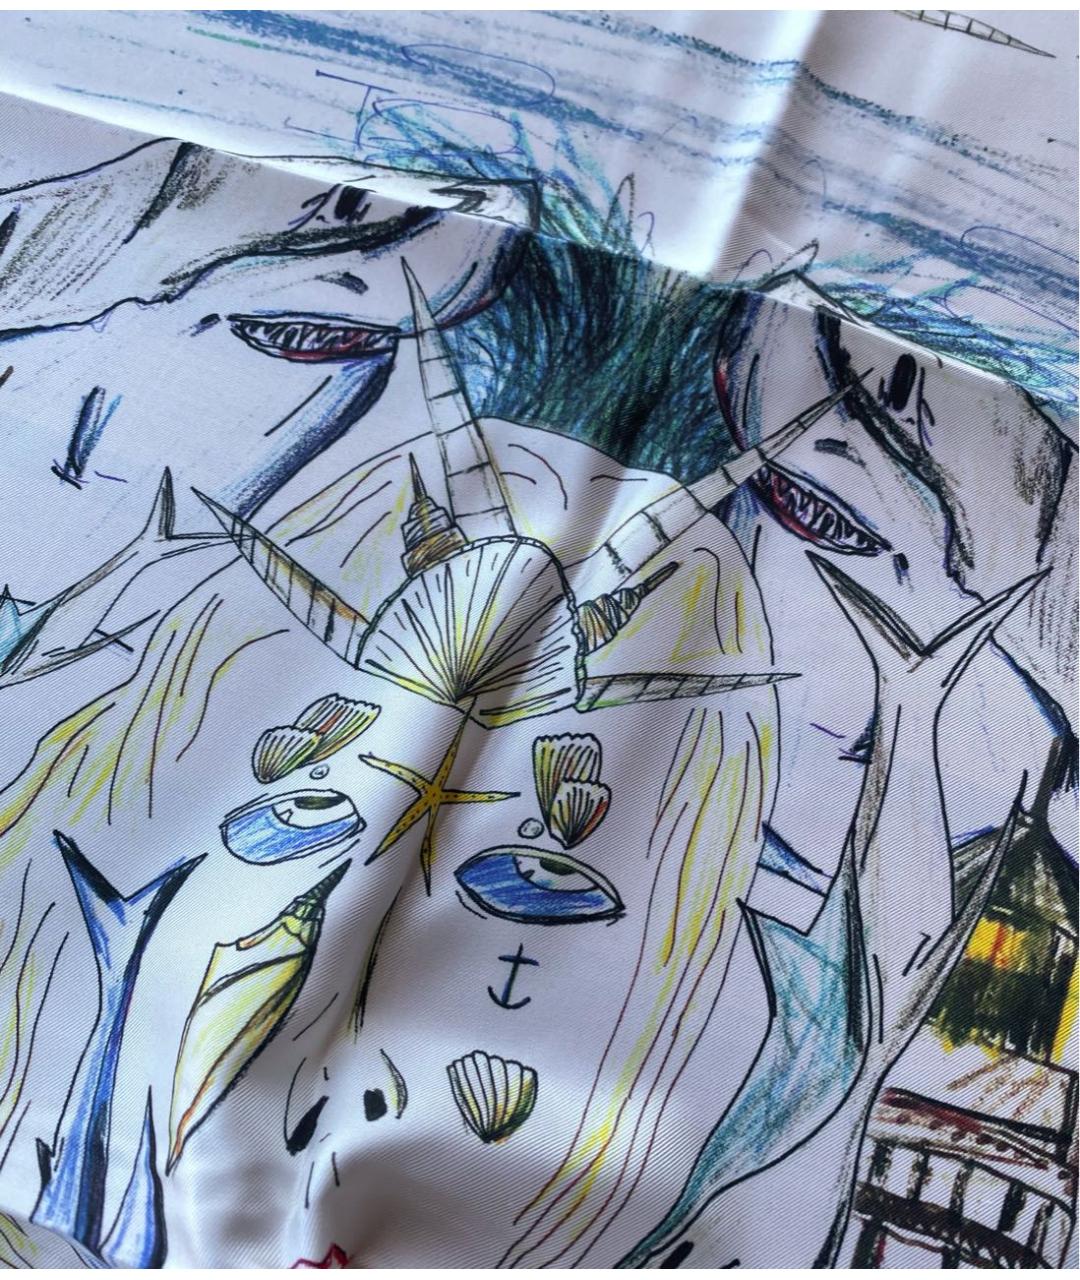 BURBERRY Мульти шелковый платок, фото 2